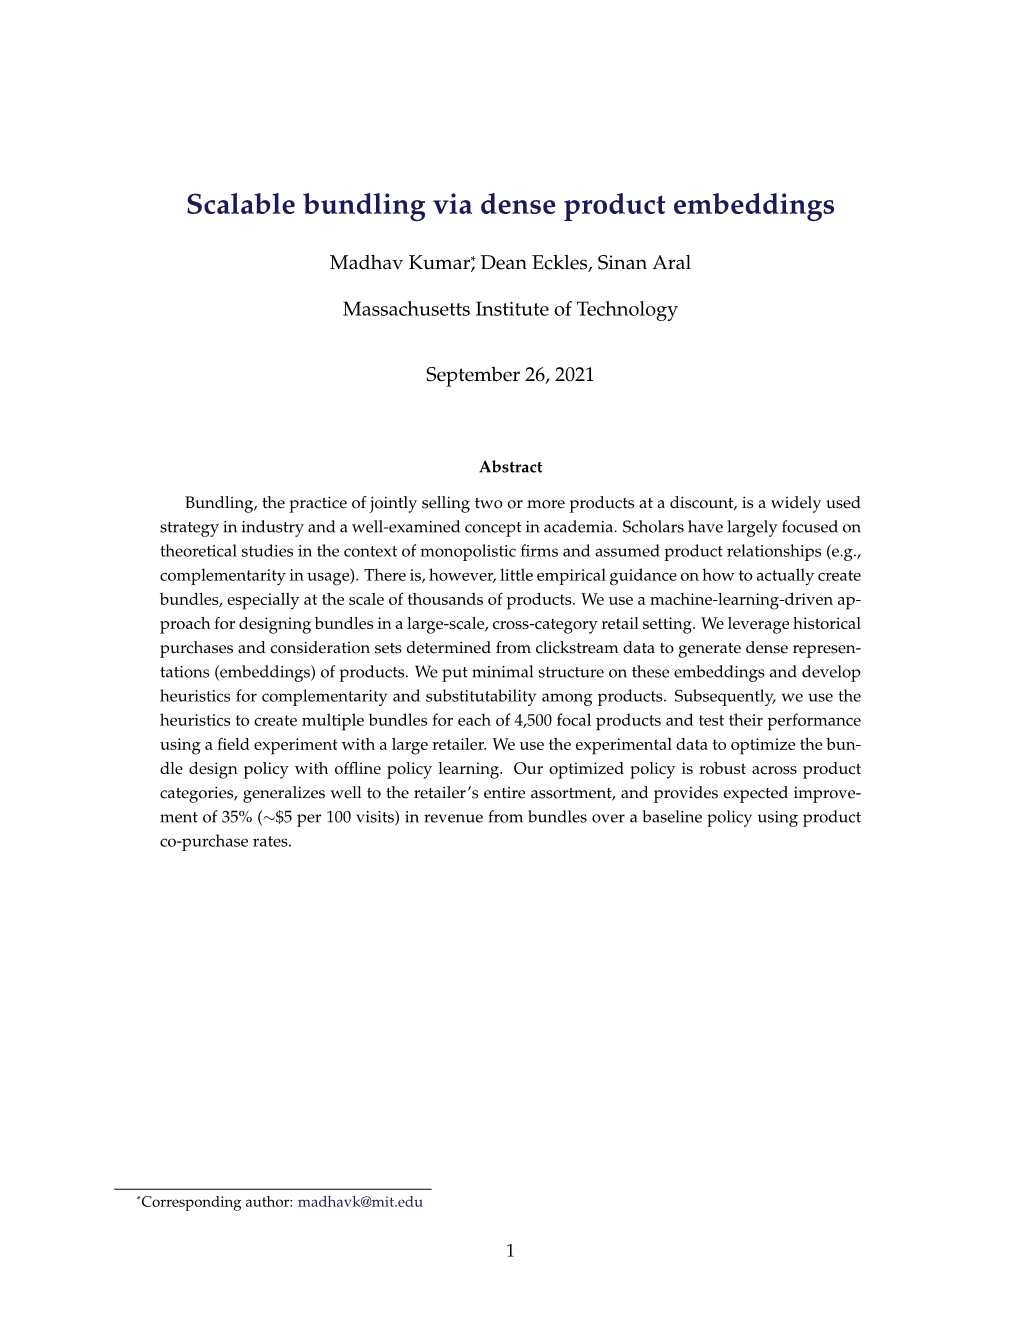 Scalable Bundling Via Dense Product Embeddings